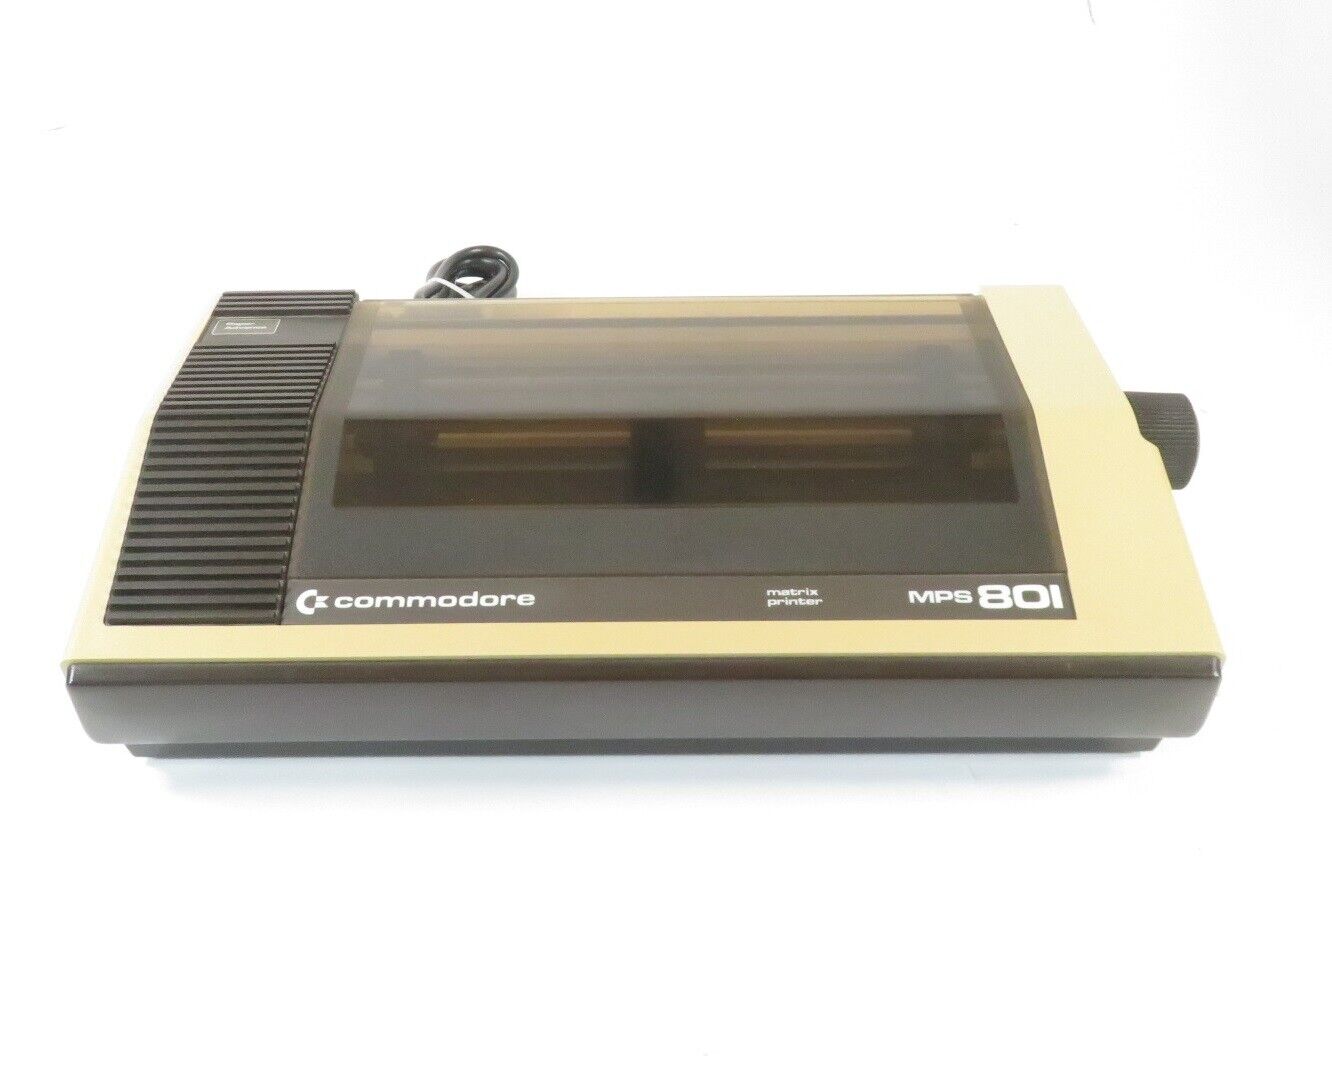 Commodore MPS-801 Vintage Dot Matrix Printer